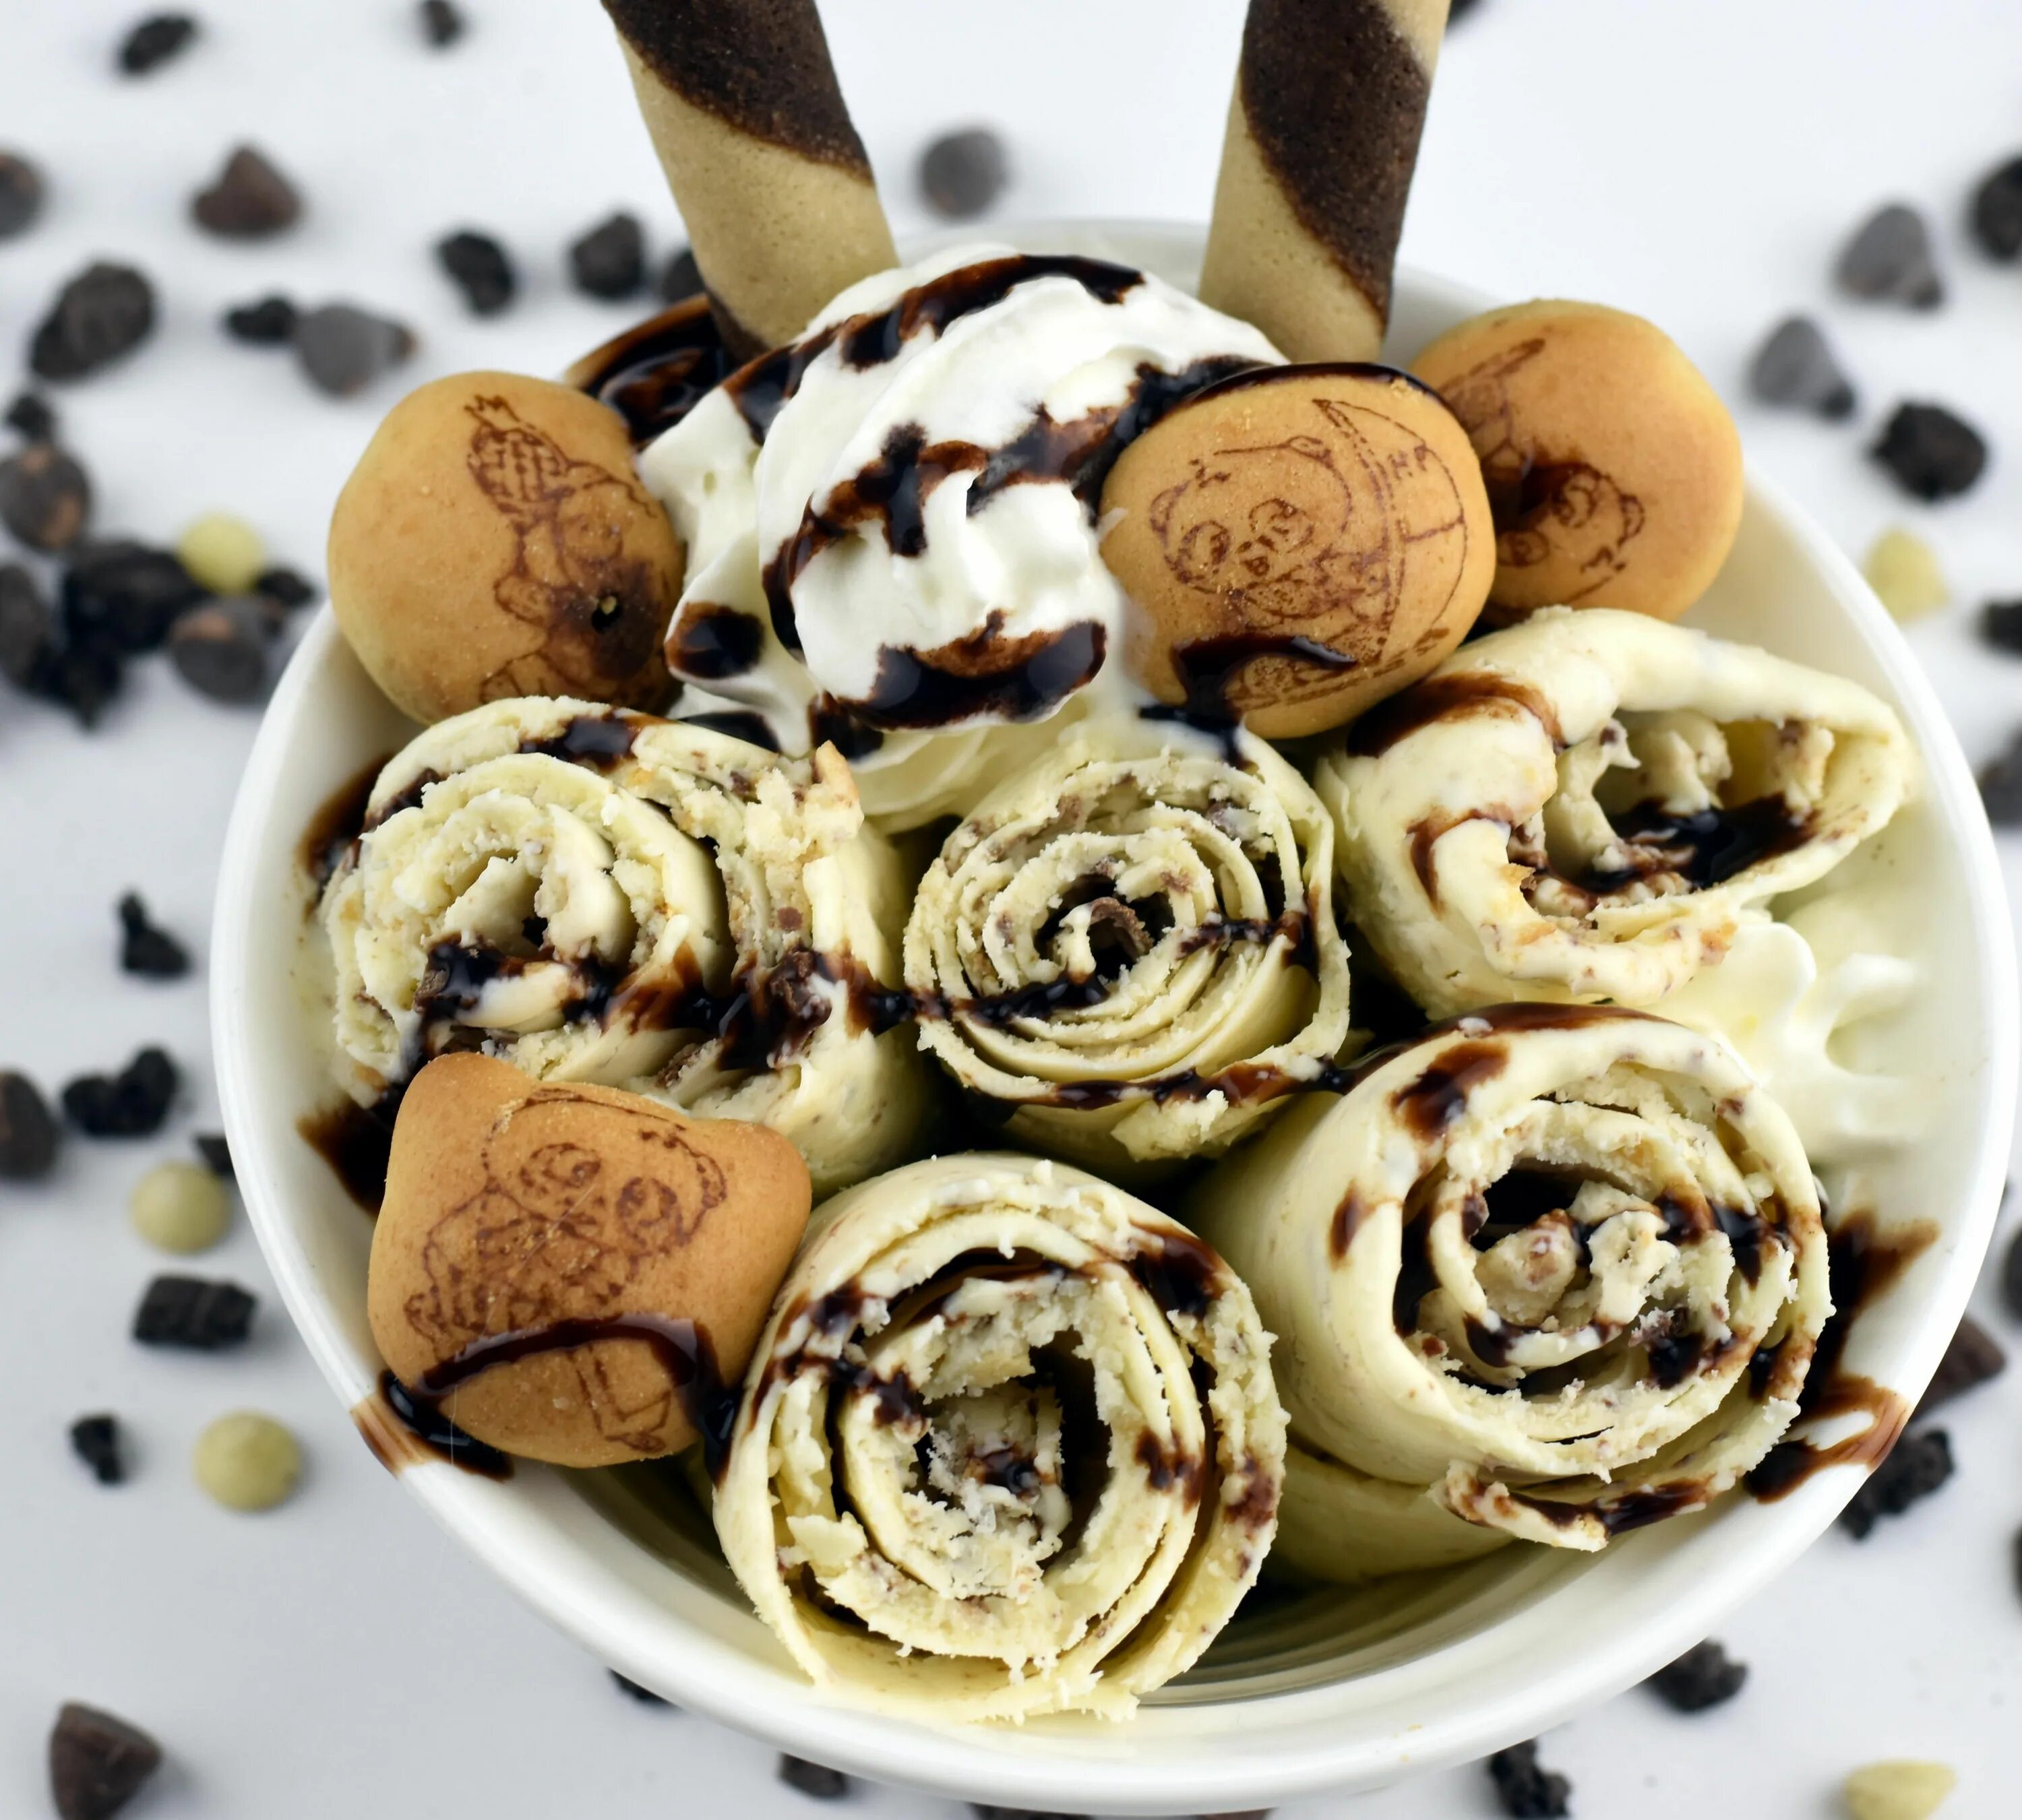 Cream rolls. Ролл мороженое. Тайское мороженое. Rolled Choco Ice Cream. Жареное ролл мороженое.